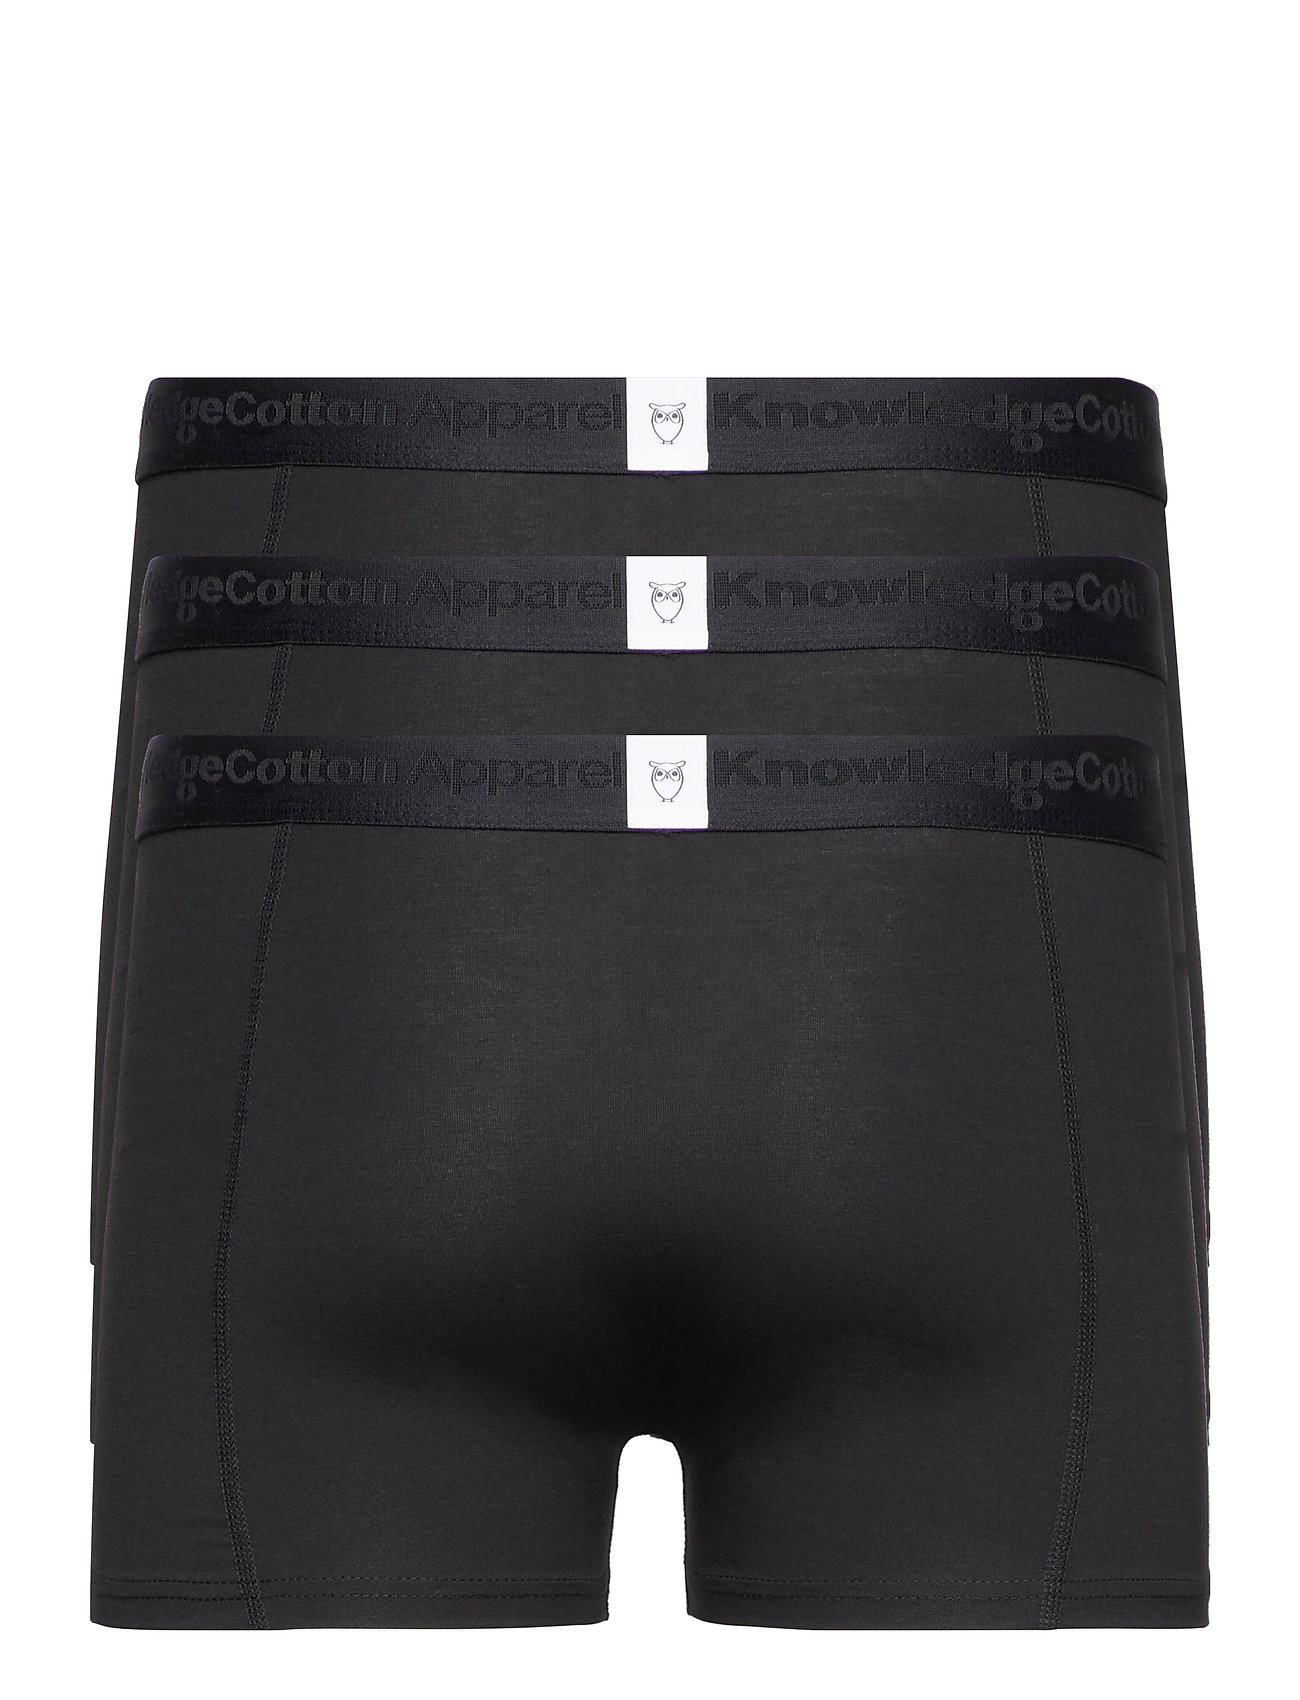 Knowledge Cotton Apparel - 3-pack underwear - GOTS/Vegan - multipack underpants - black jet - 1